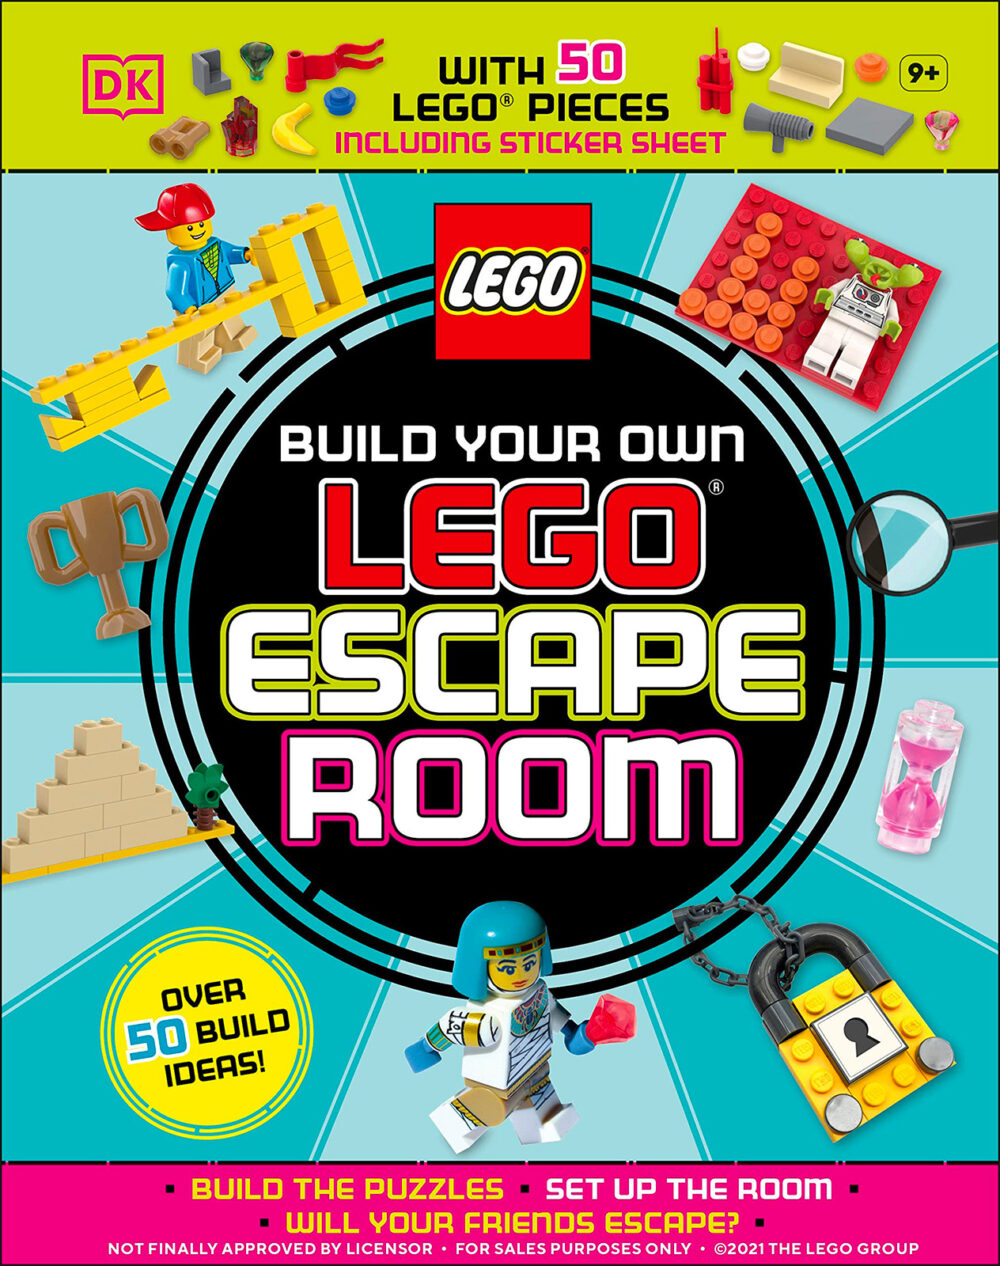 LEGO Escape Room